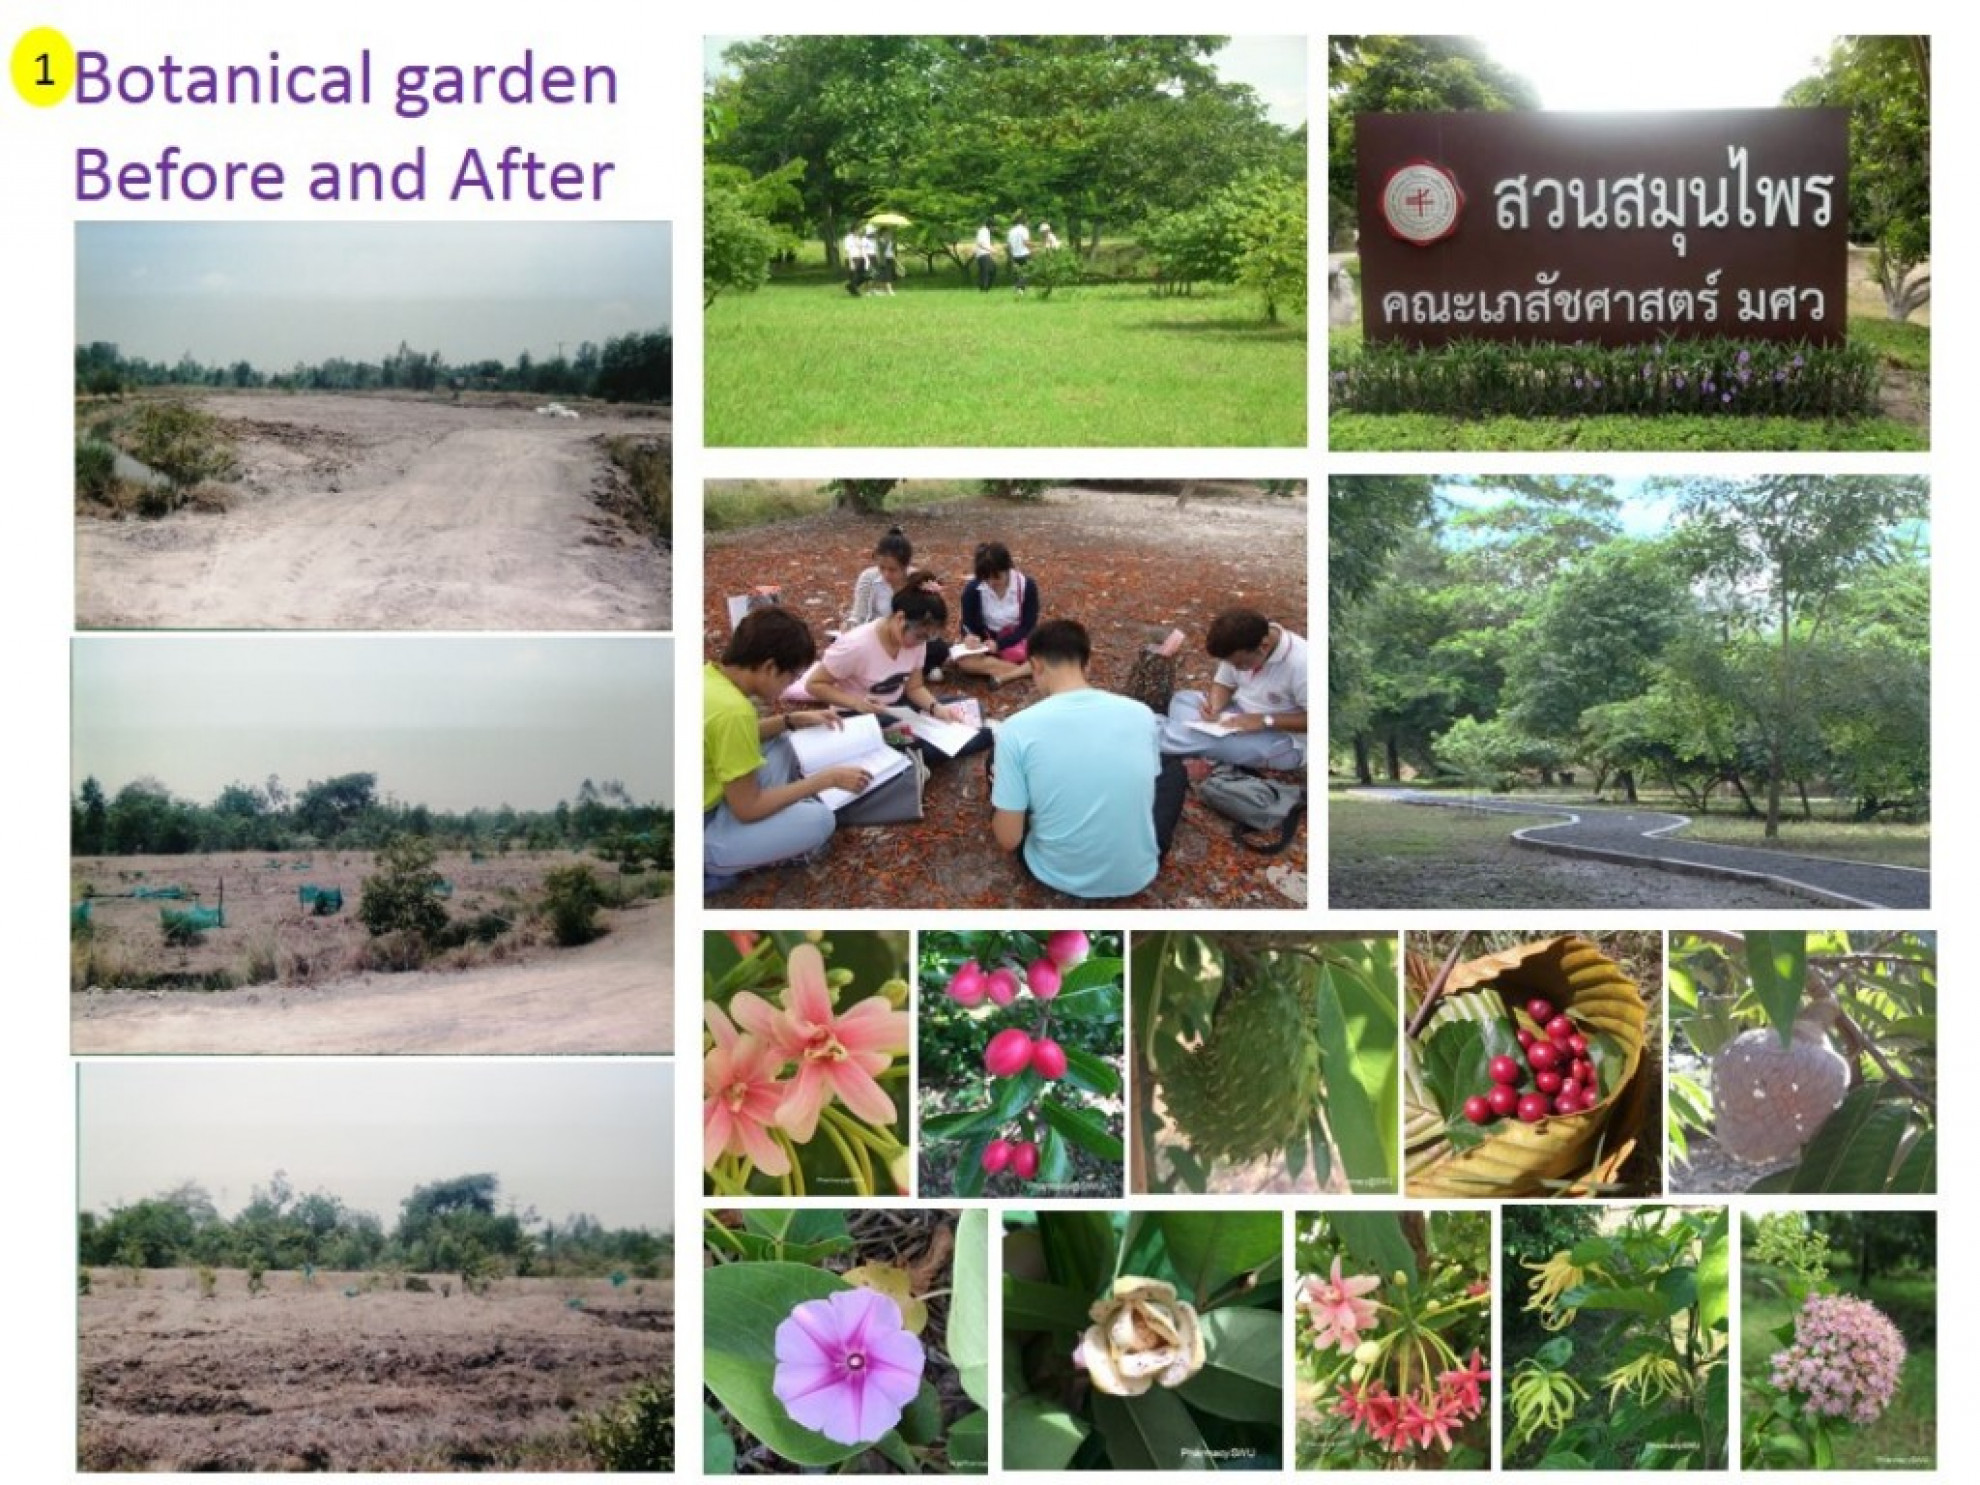 The botanical garden of Faculty of Pharmacy, Srinakharinwirot University